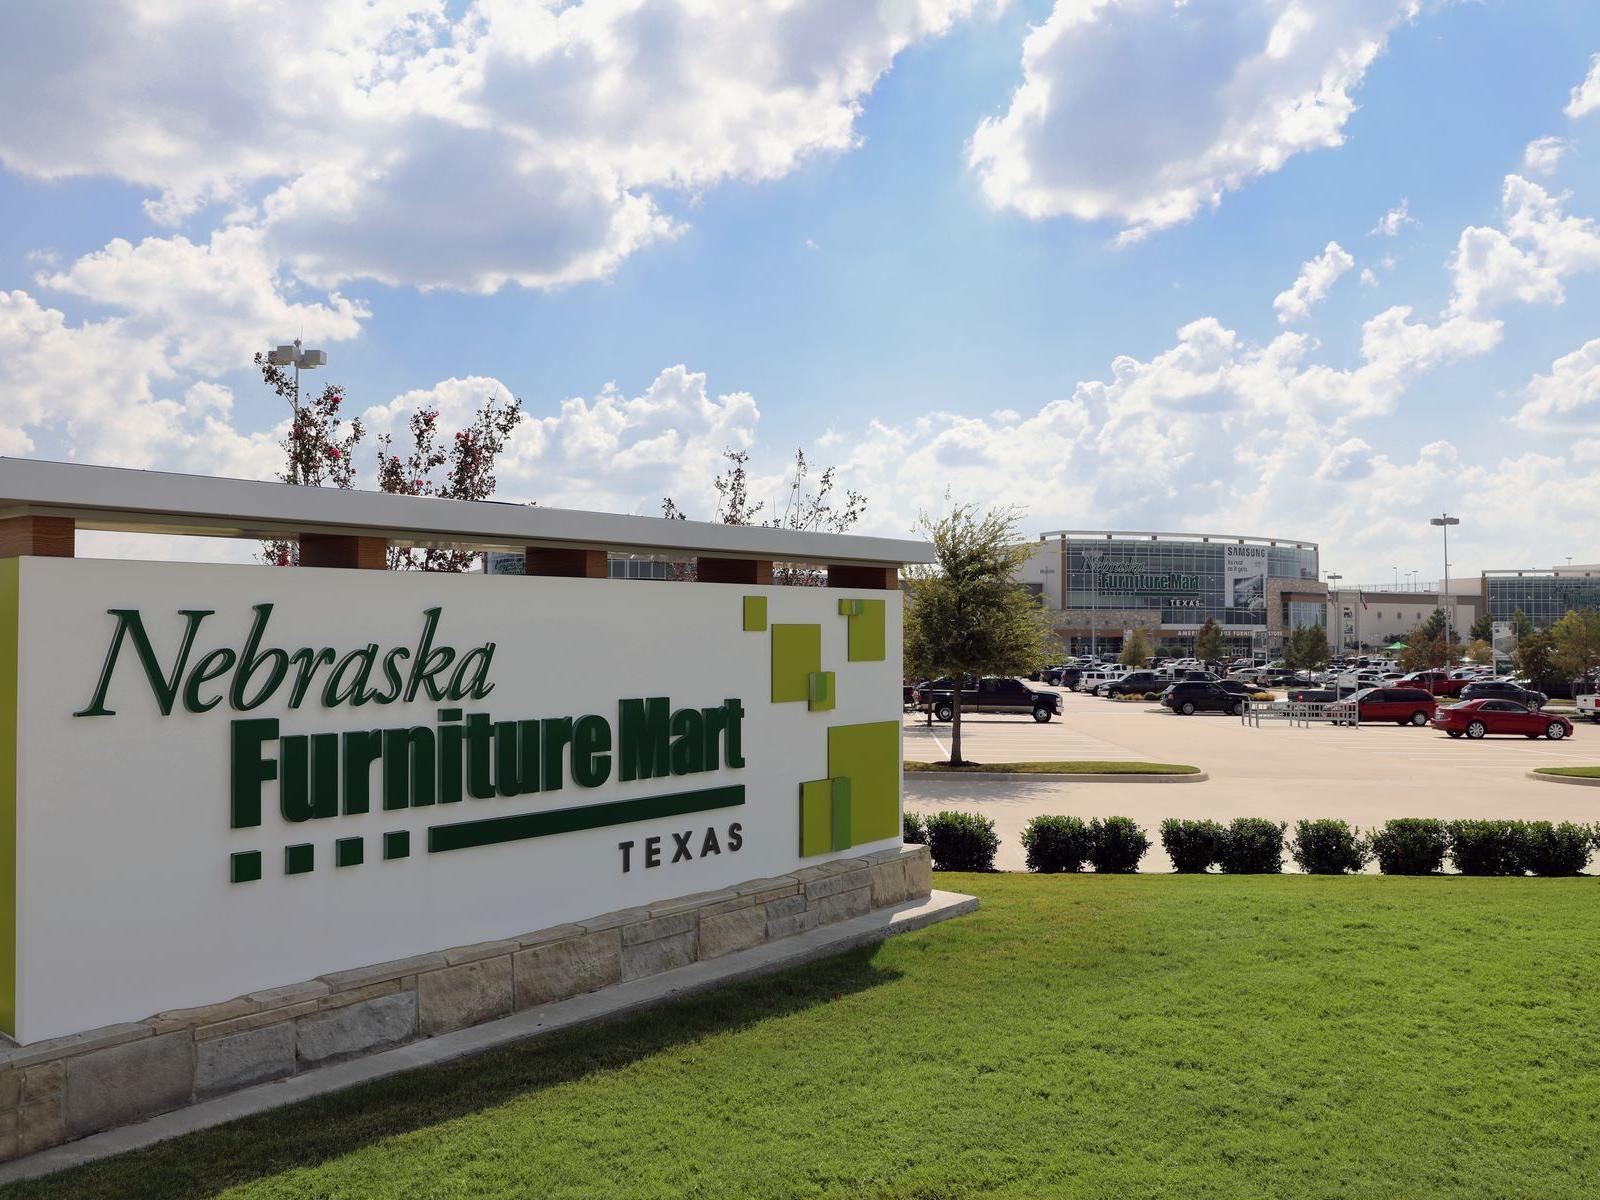 Nebraska Furniture Mart Texas (NFM) - The Colony Attractions